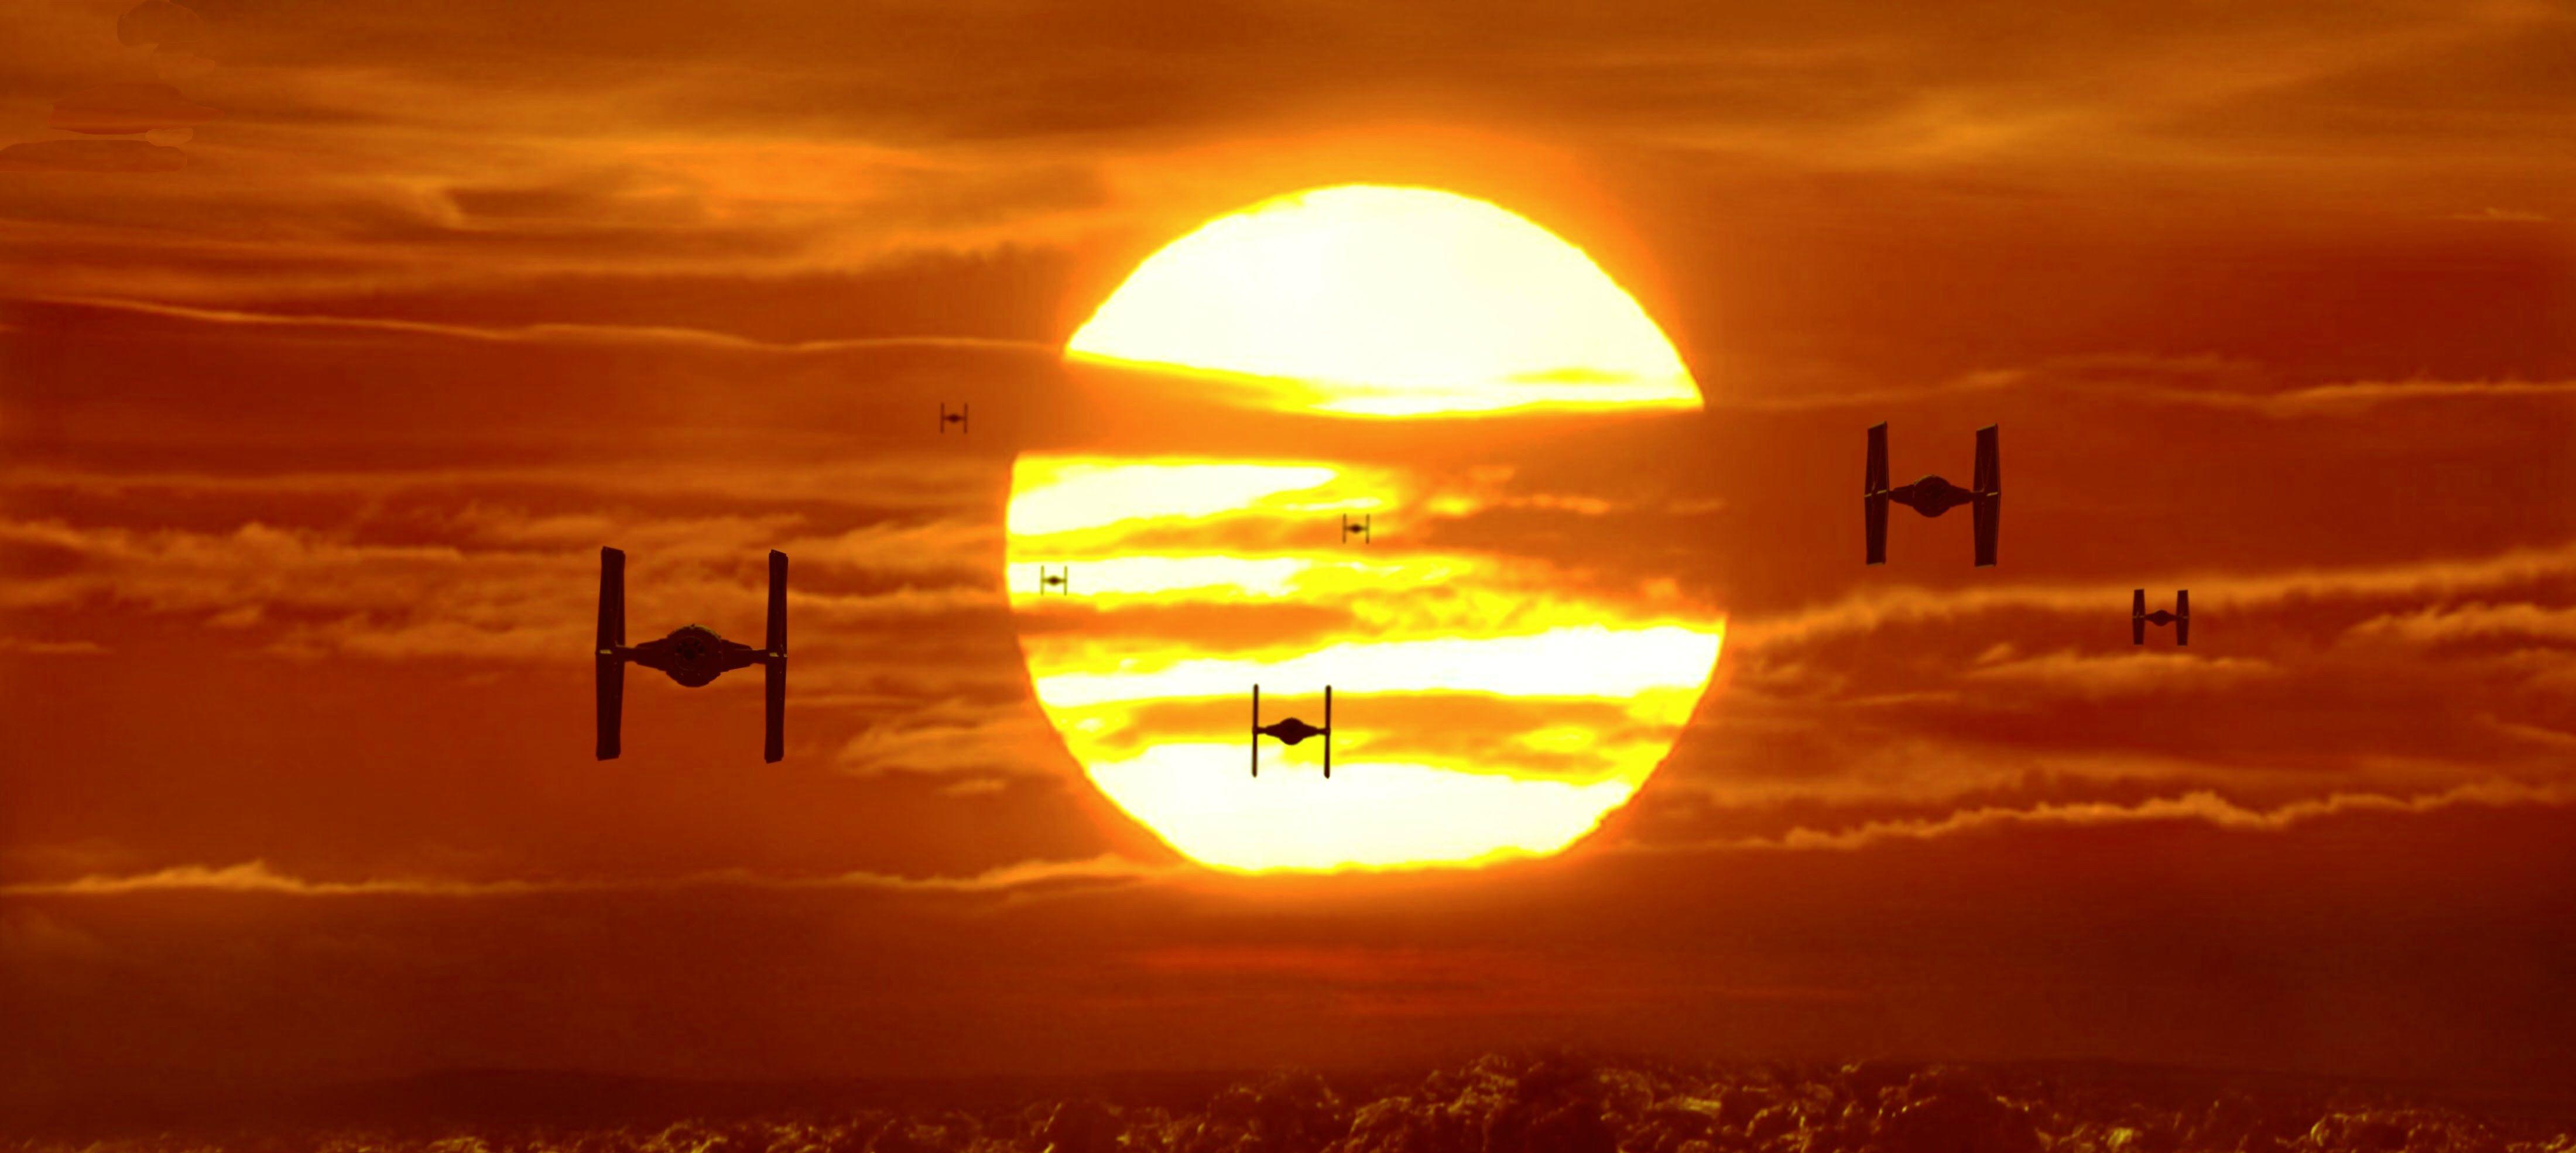 Star Wars TIE Fighter sunset 4k wide wallpaper